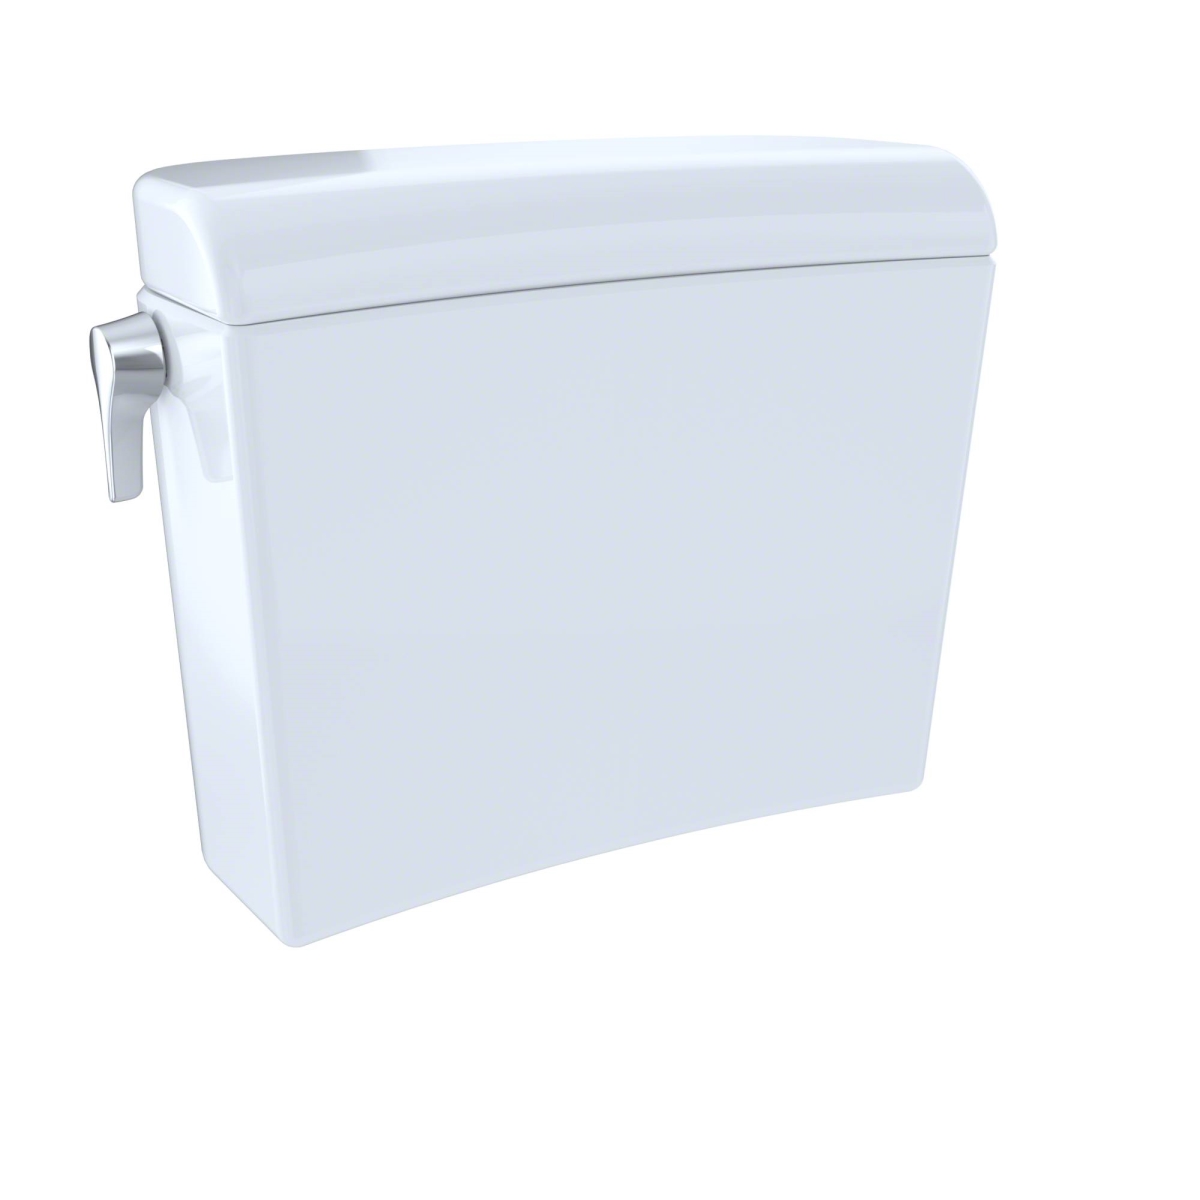 St484m-01 Maris Dual-max 1.28 & 0.9 Gpf Dual Flush Toilet Tank, Cotton White